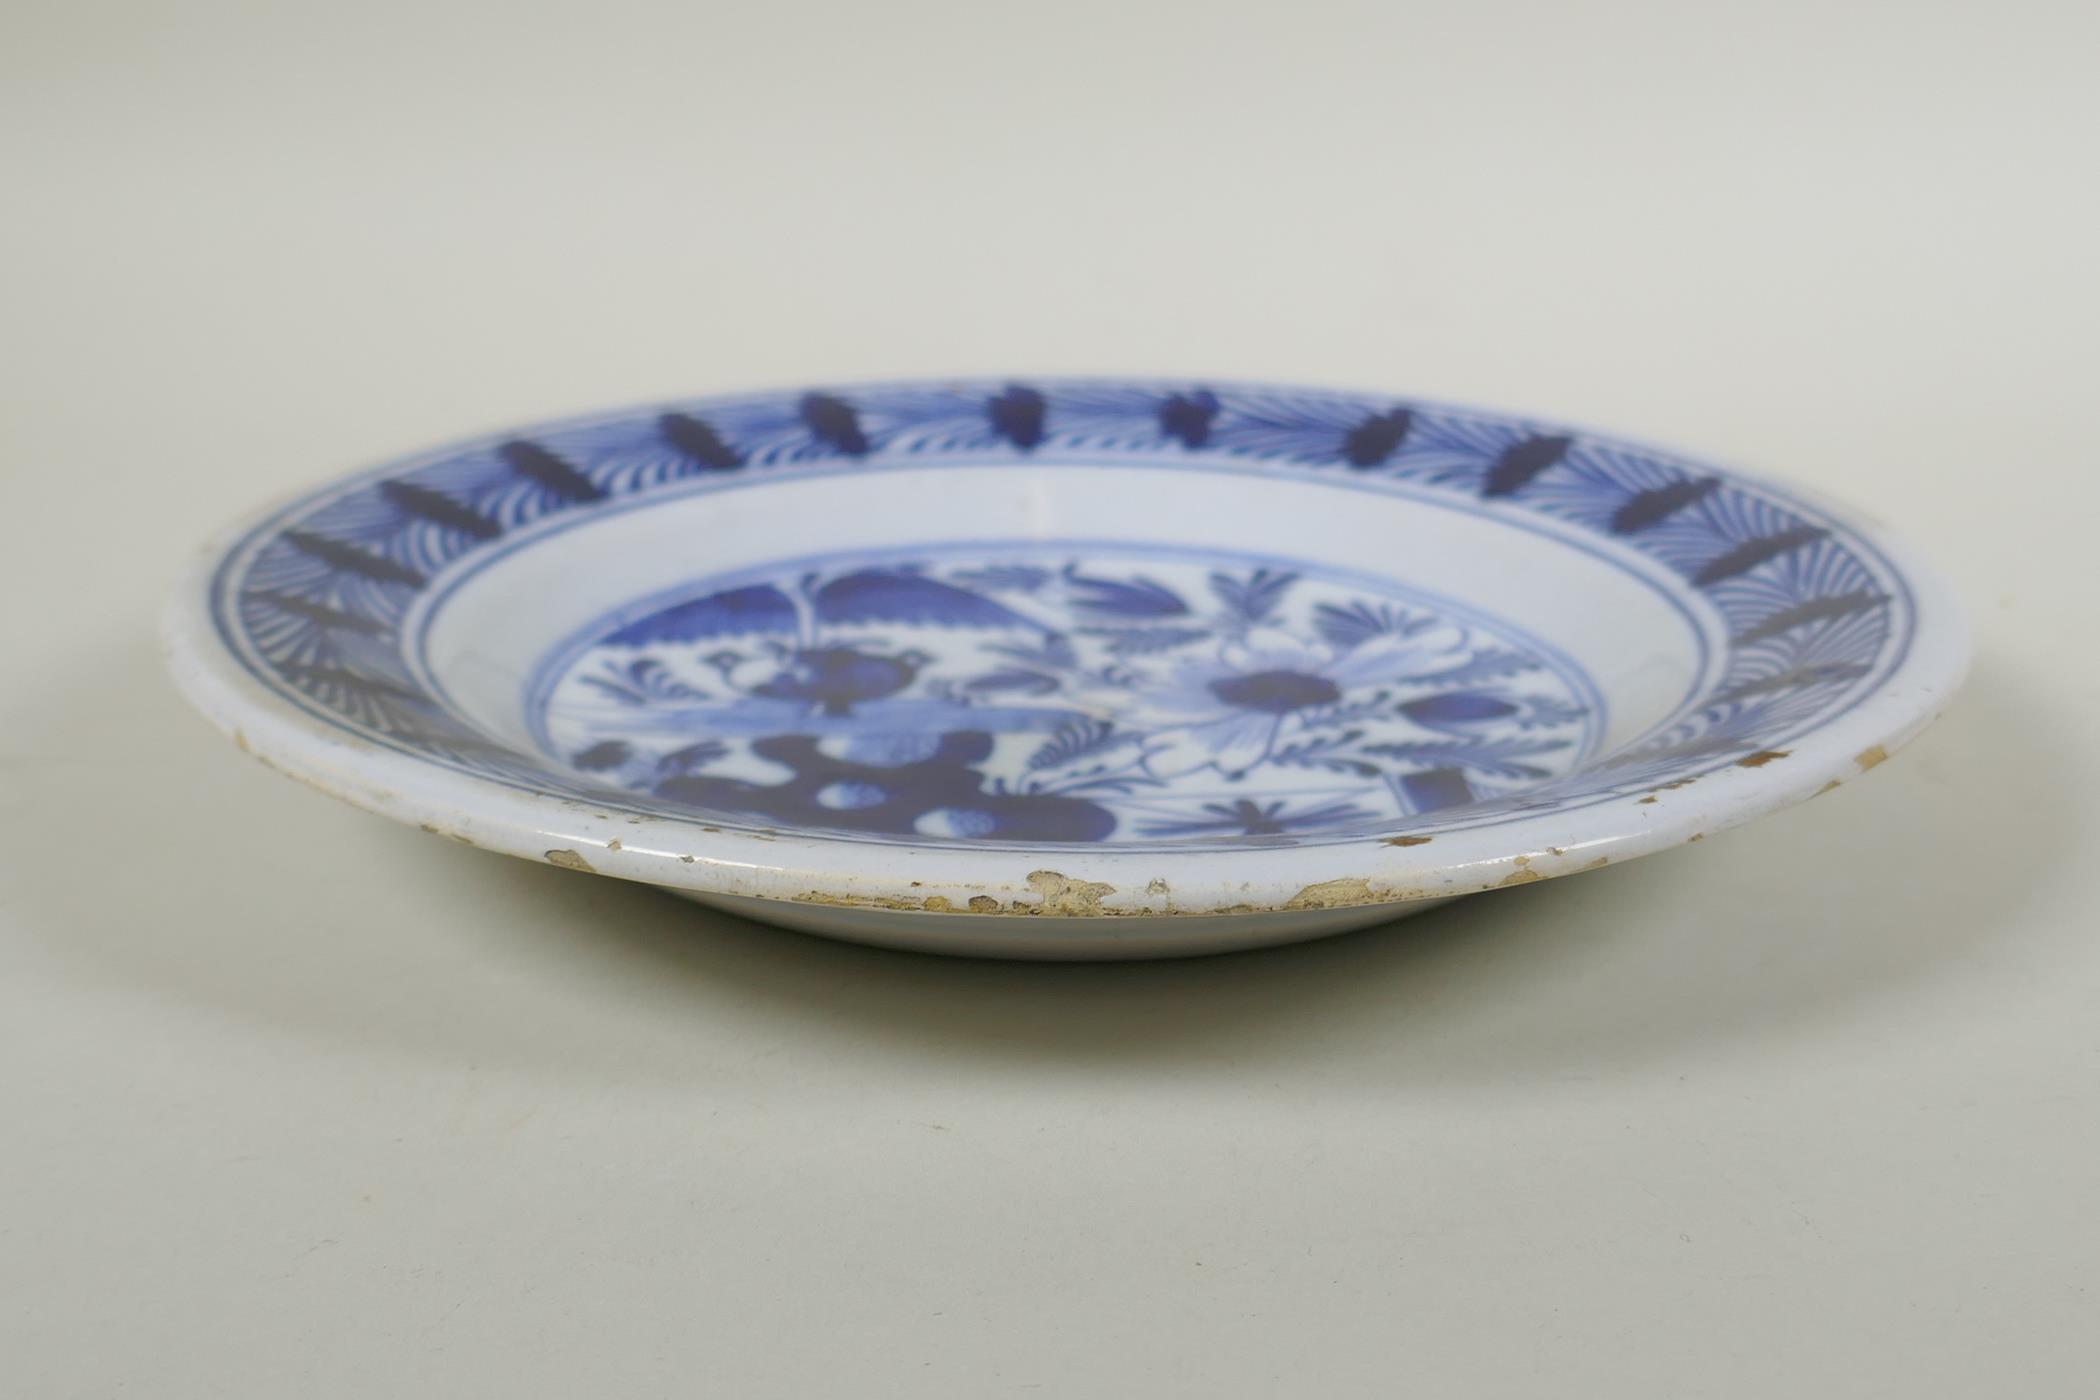 An C18th Dutch Delft blue plate with floral decoration, 23cm diameter - Image 3 of 4